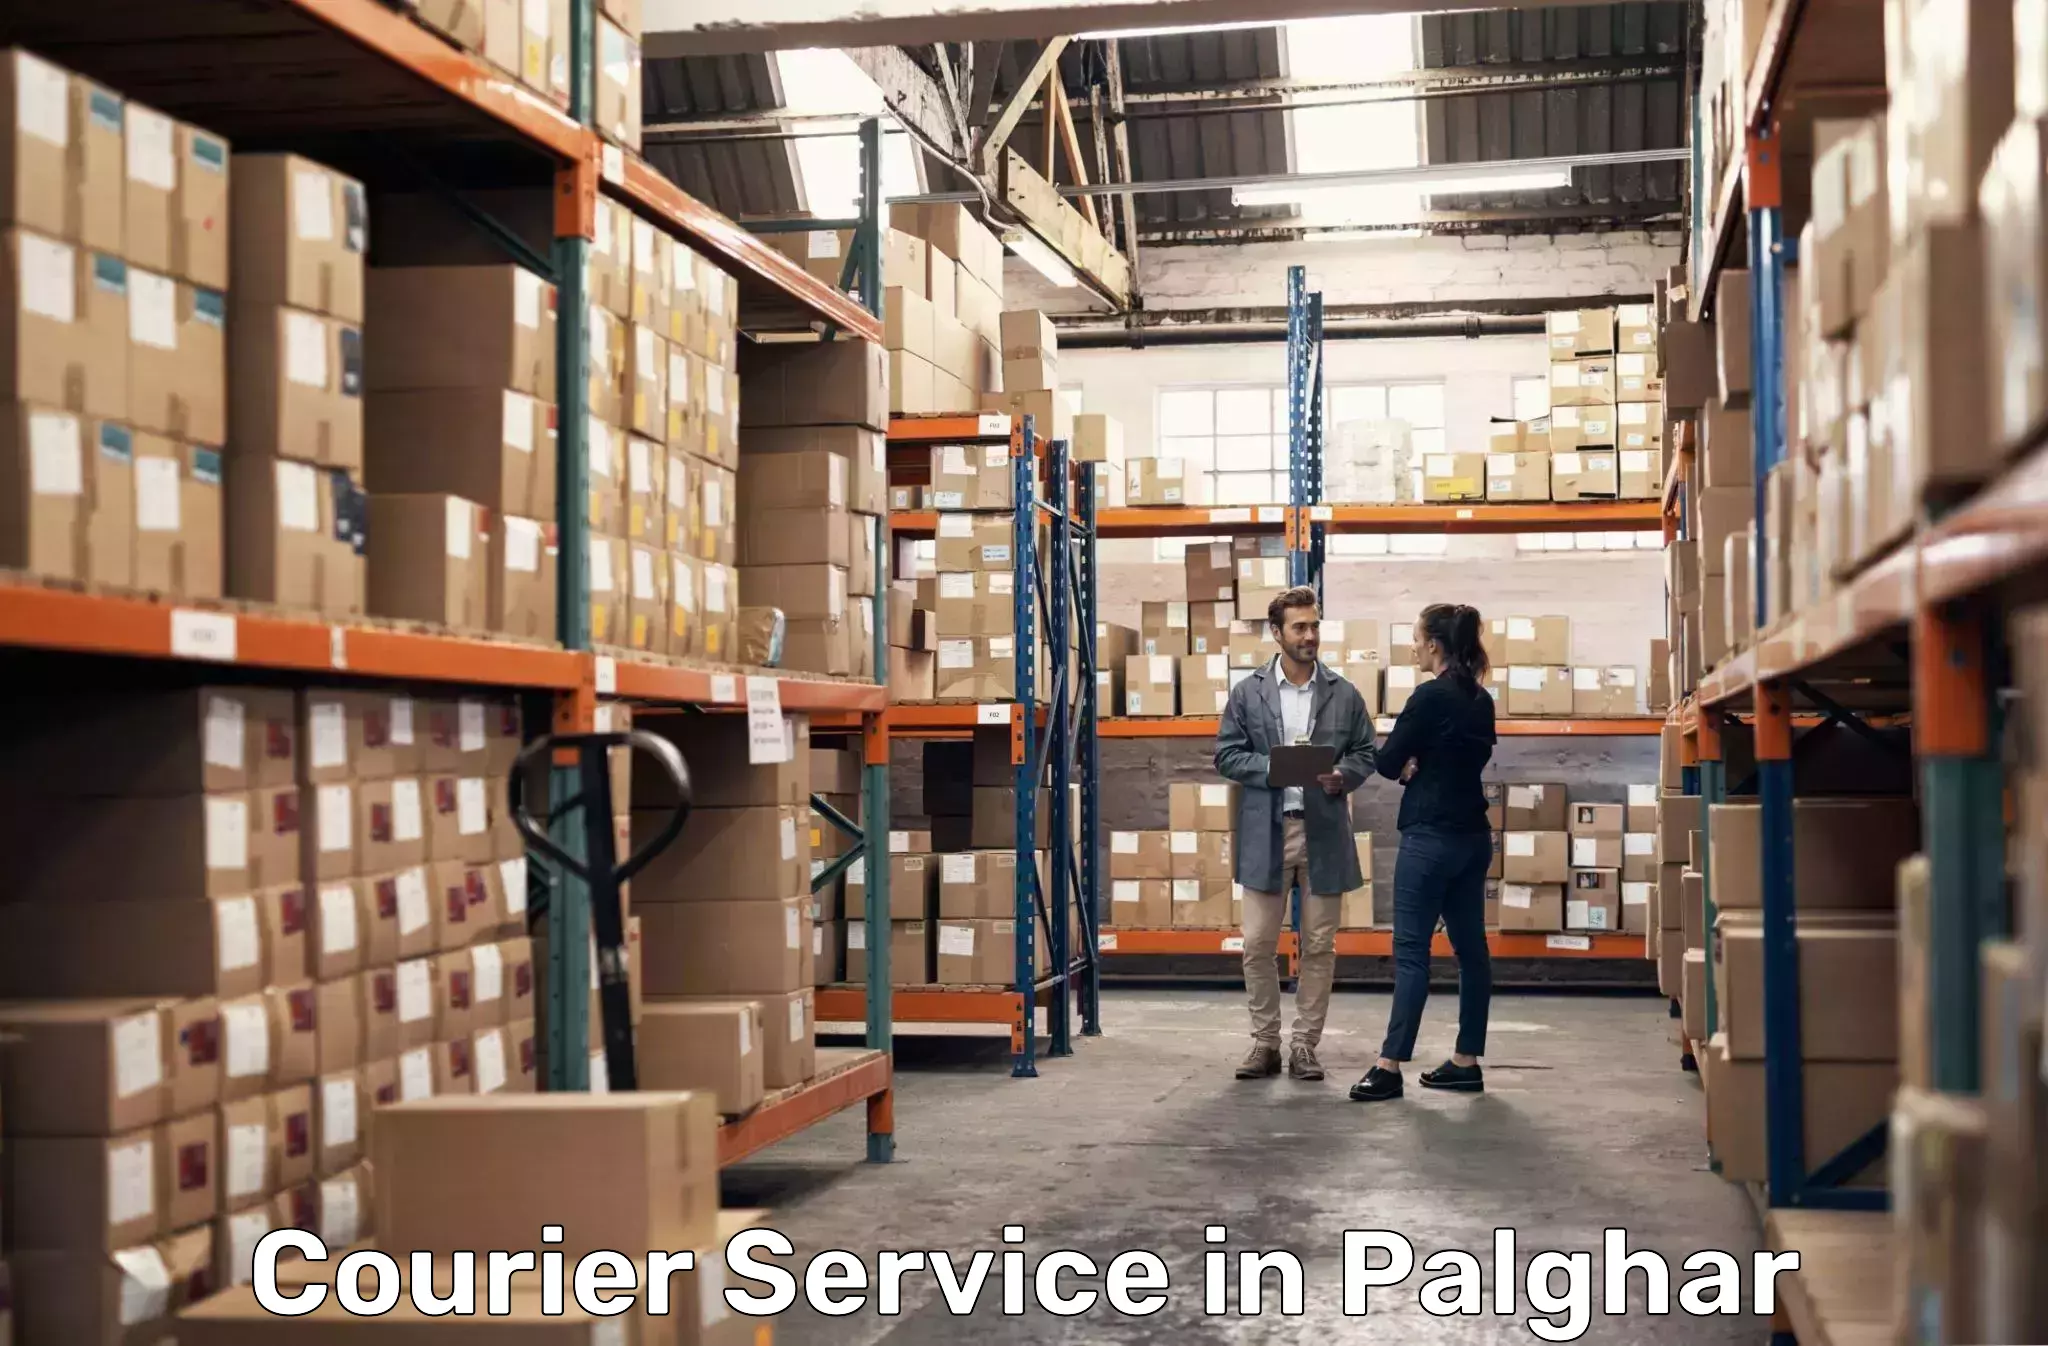 Reliable parcel services in Palghar